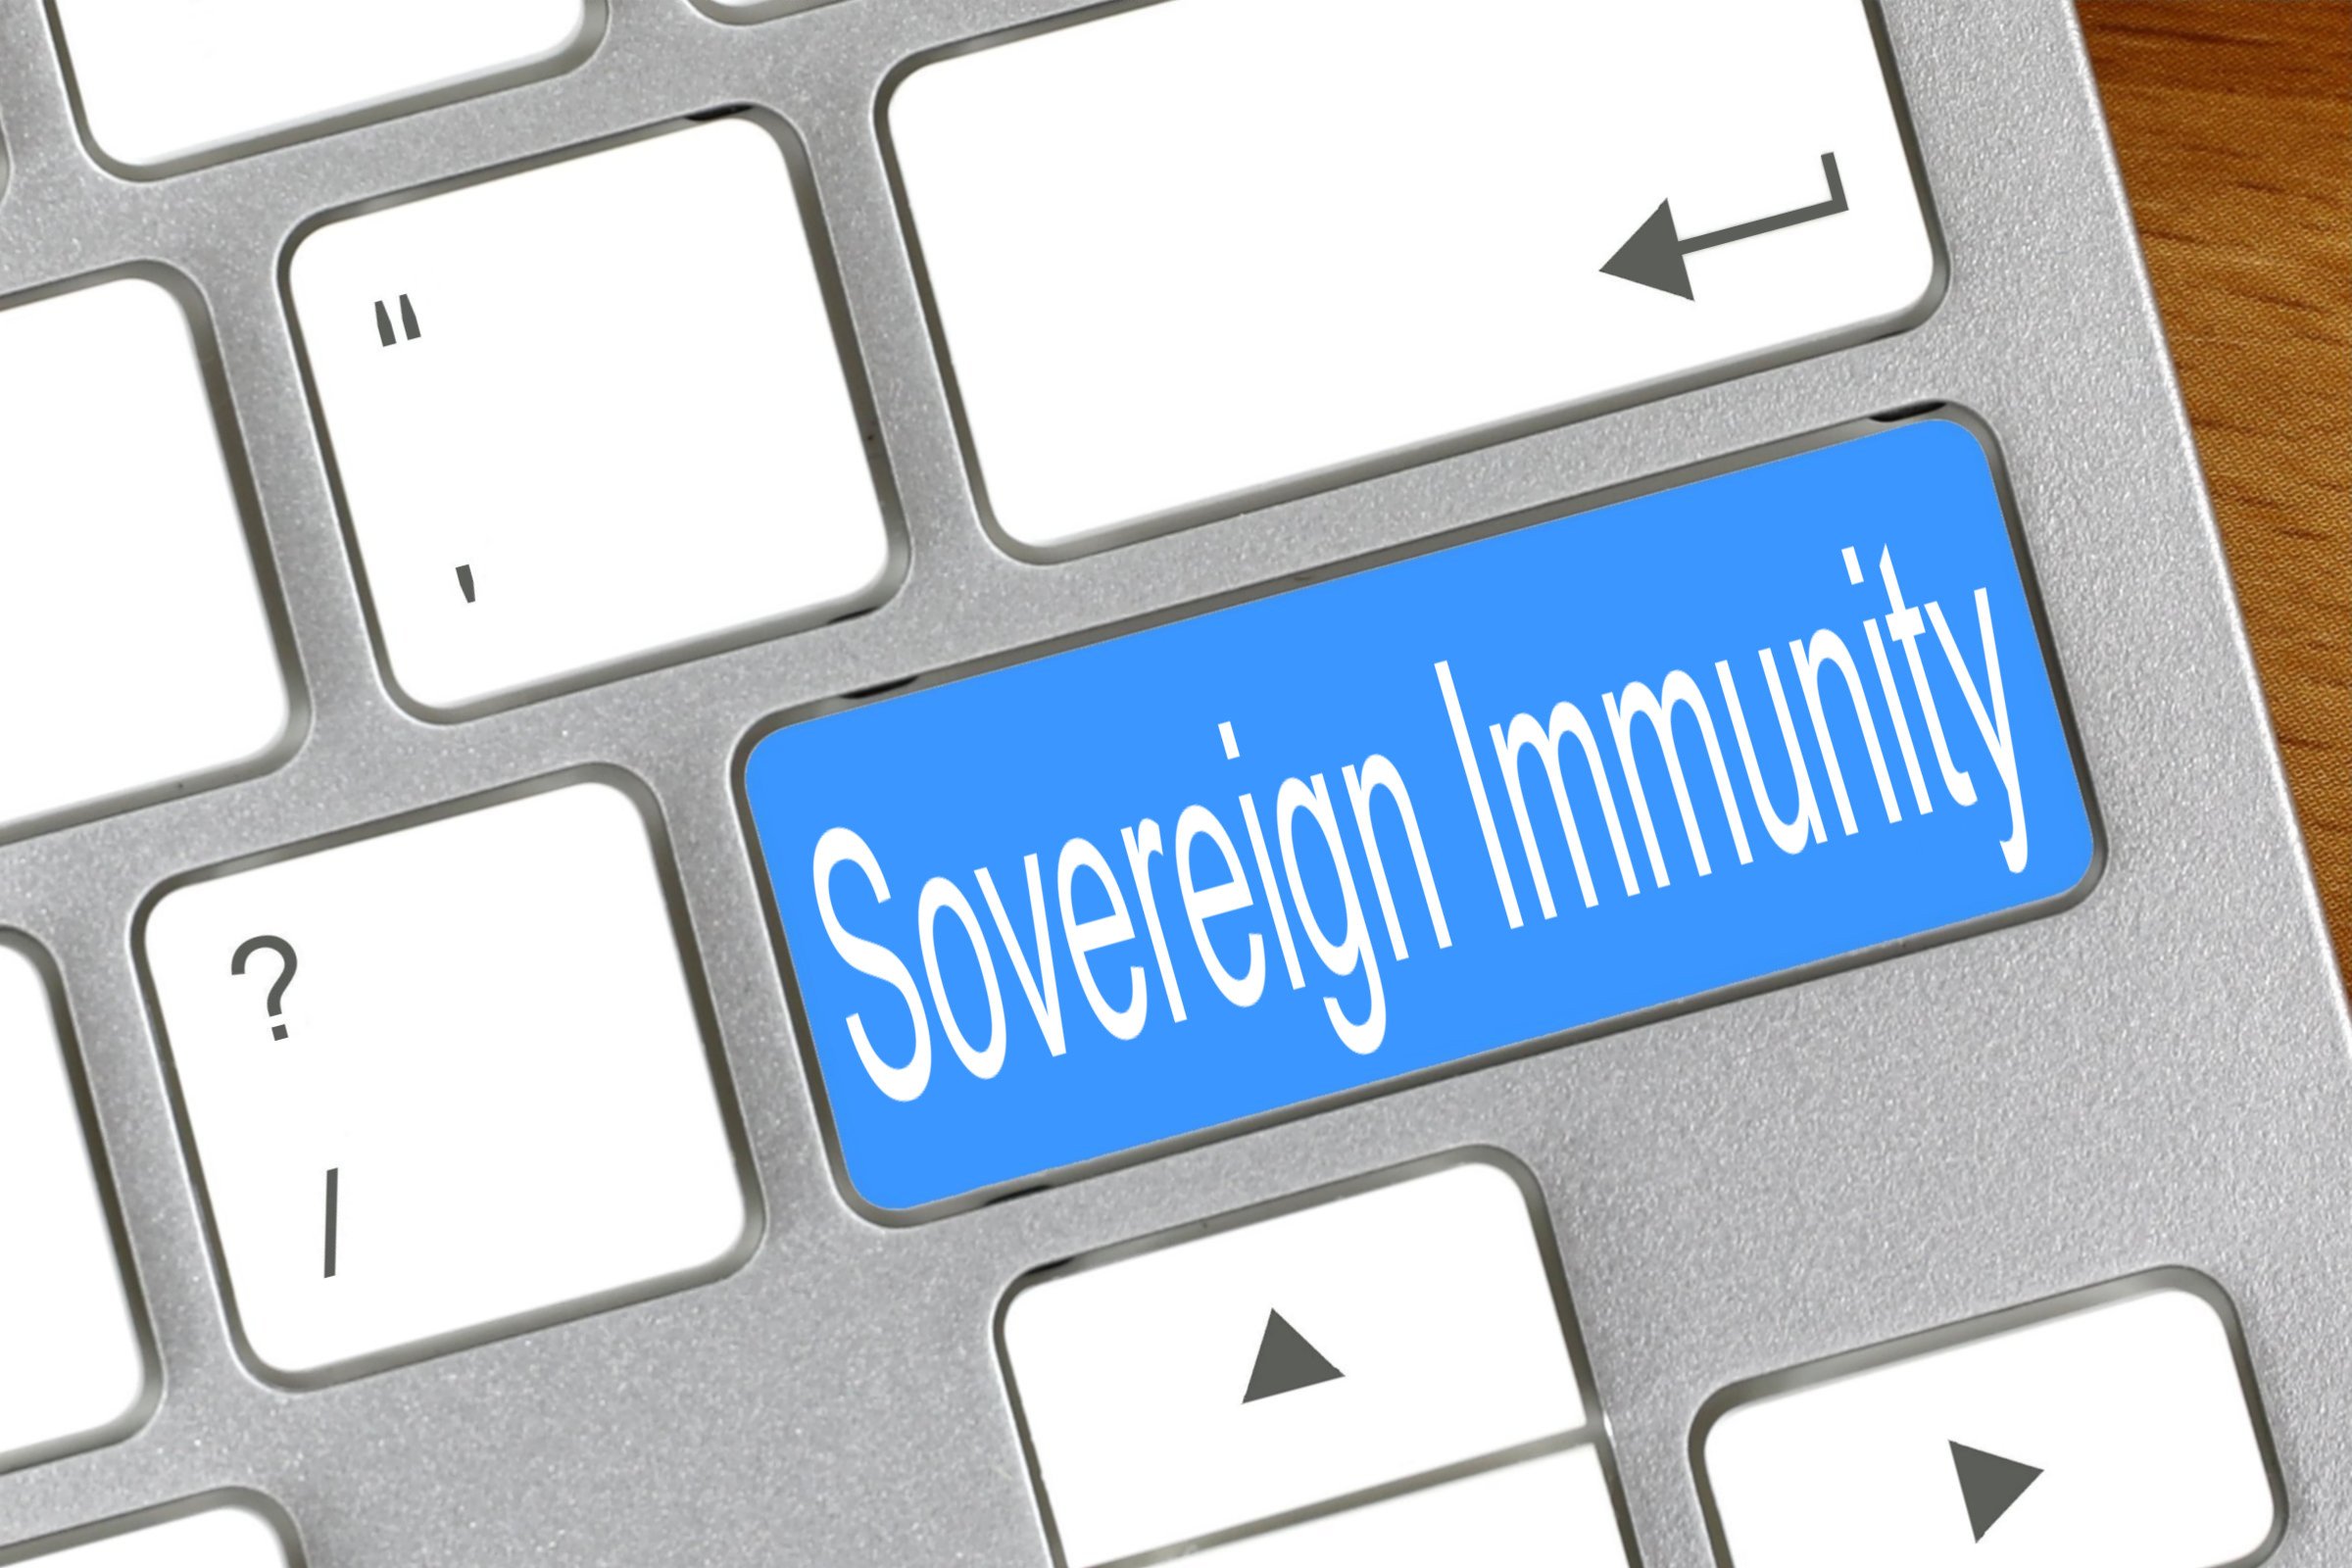 sovereign immunity